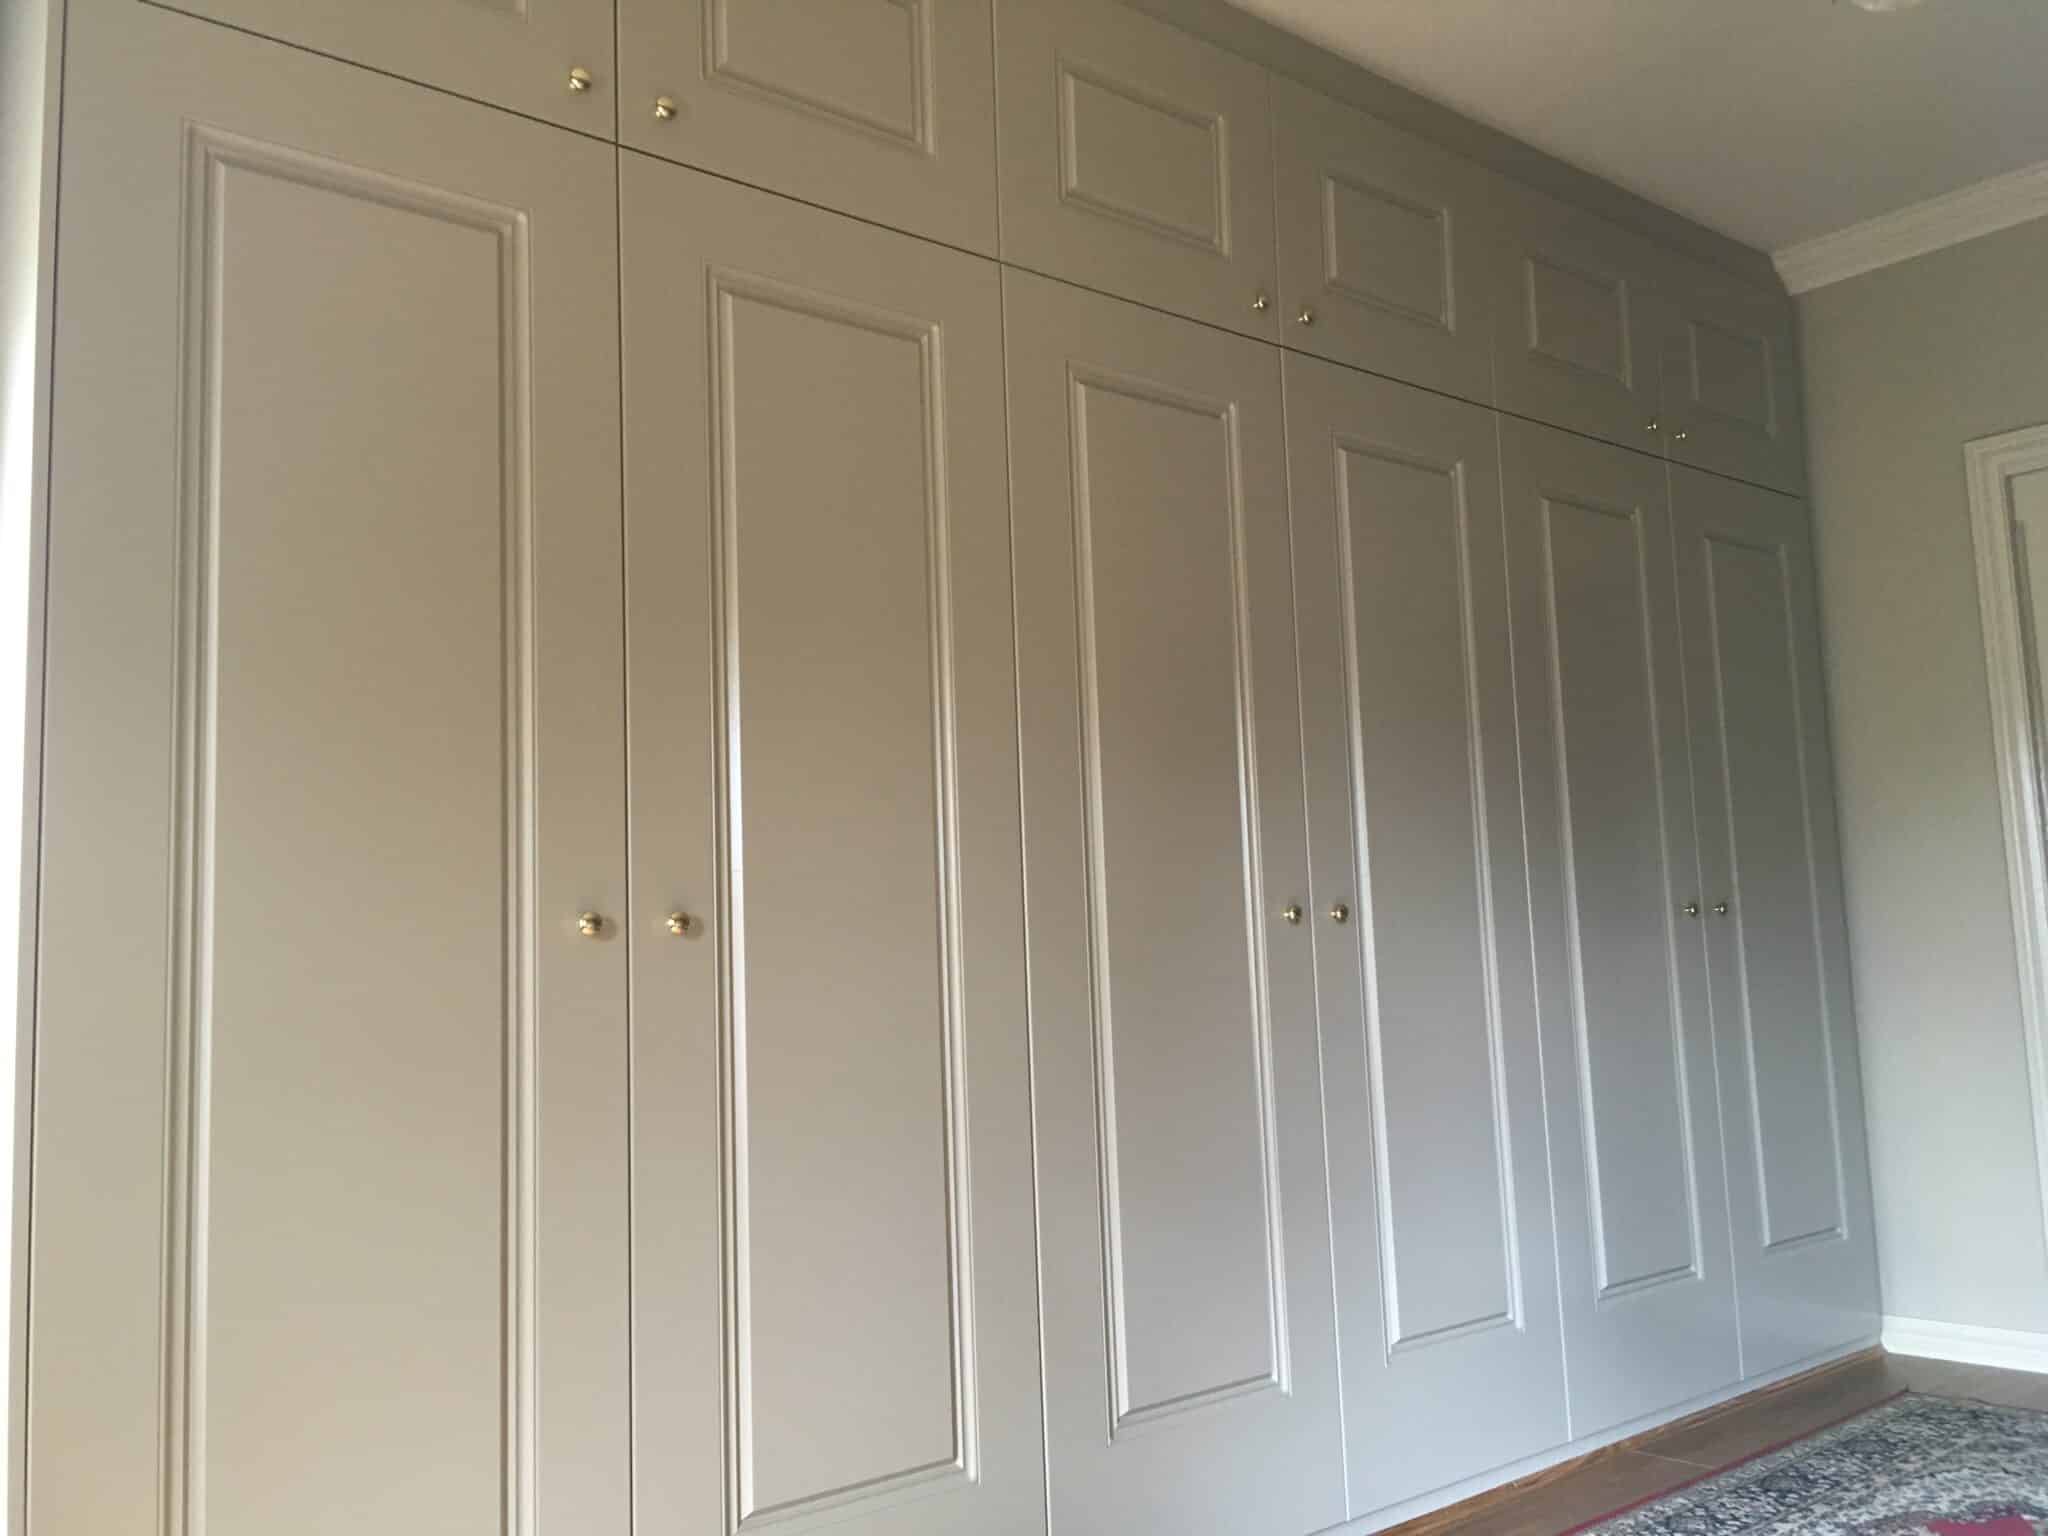 custom hinged wardrobe doors - Double Decker RAW MDF Routed Hinged Doors - Painted White